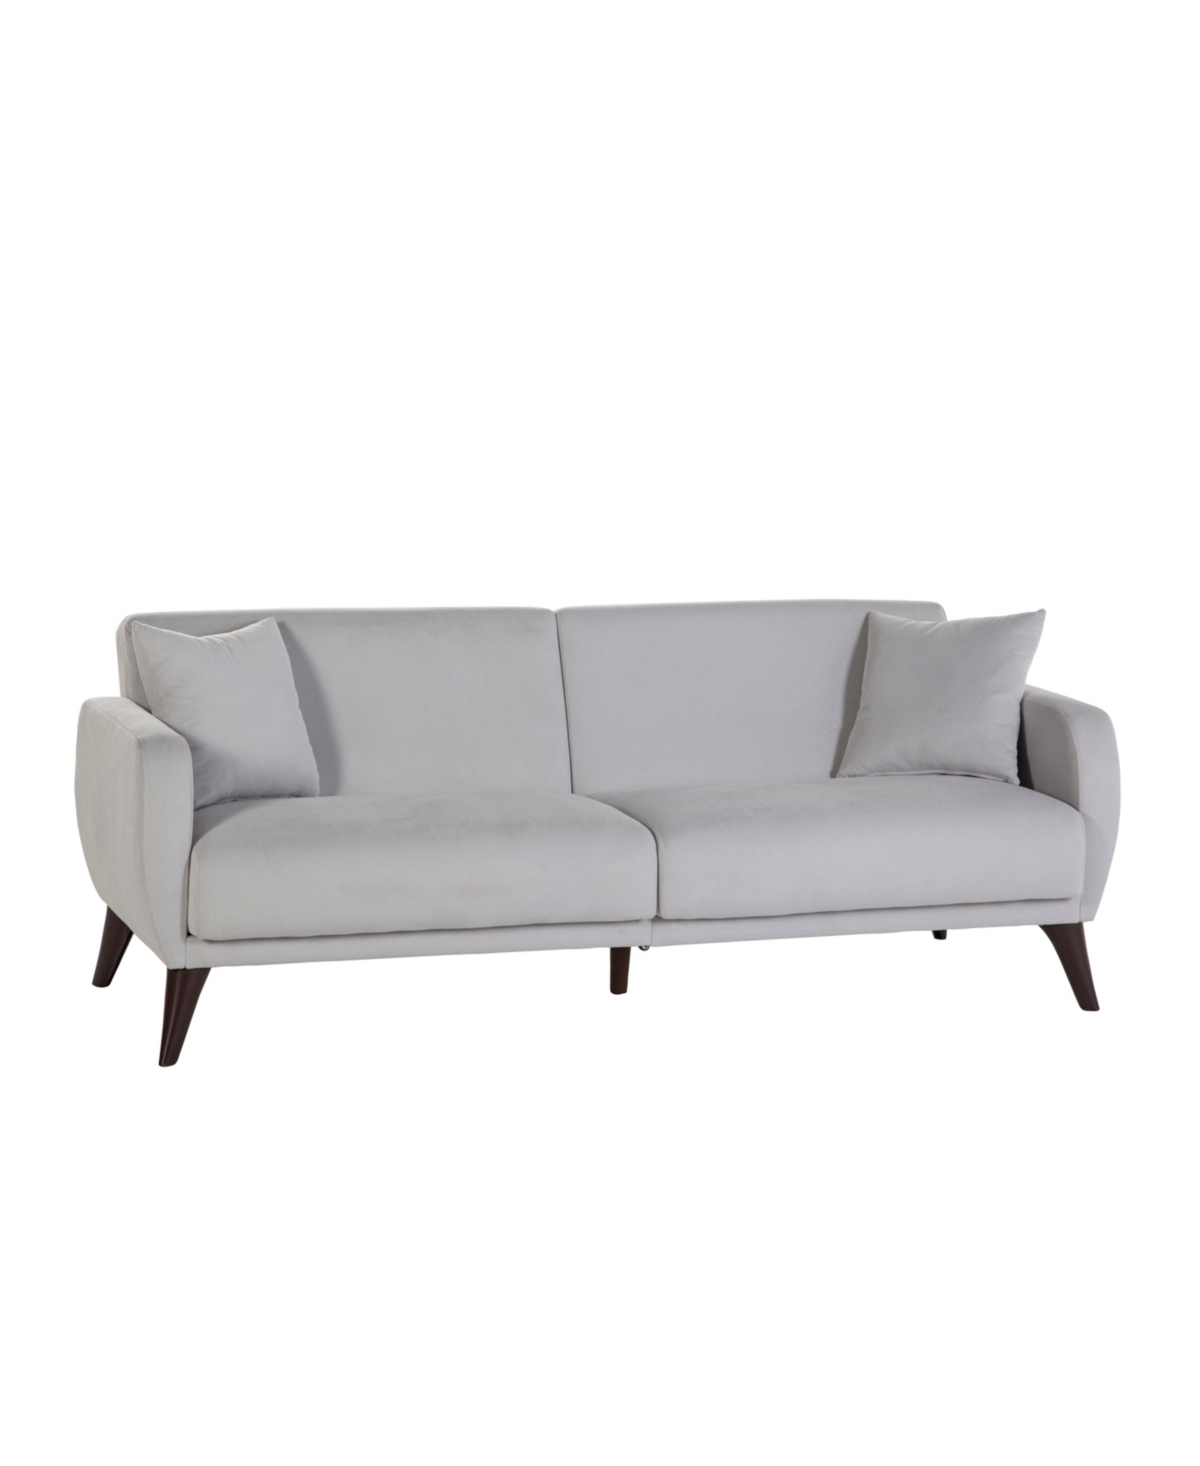 10471185 Bellona Functional Sofa in a Box sku 10471185